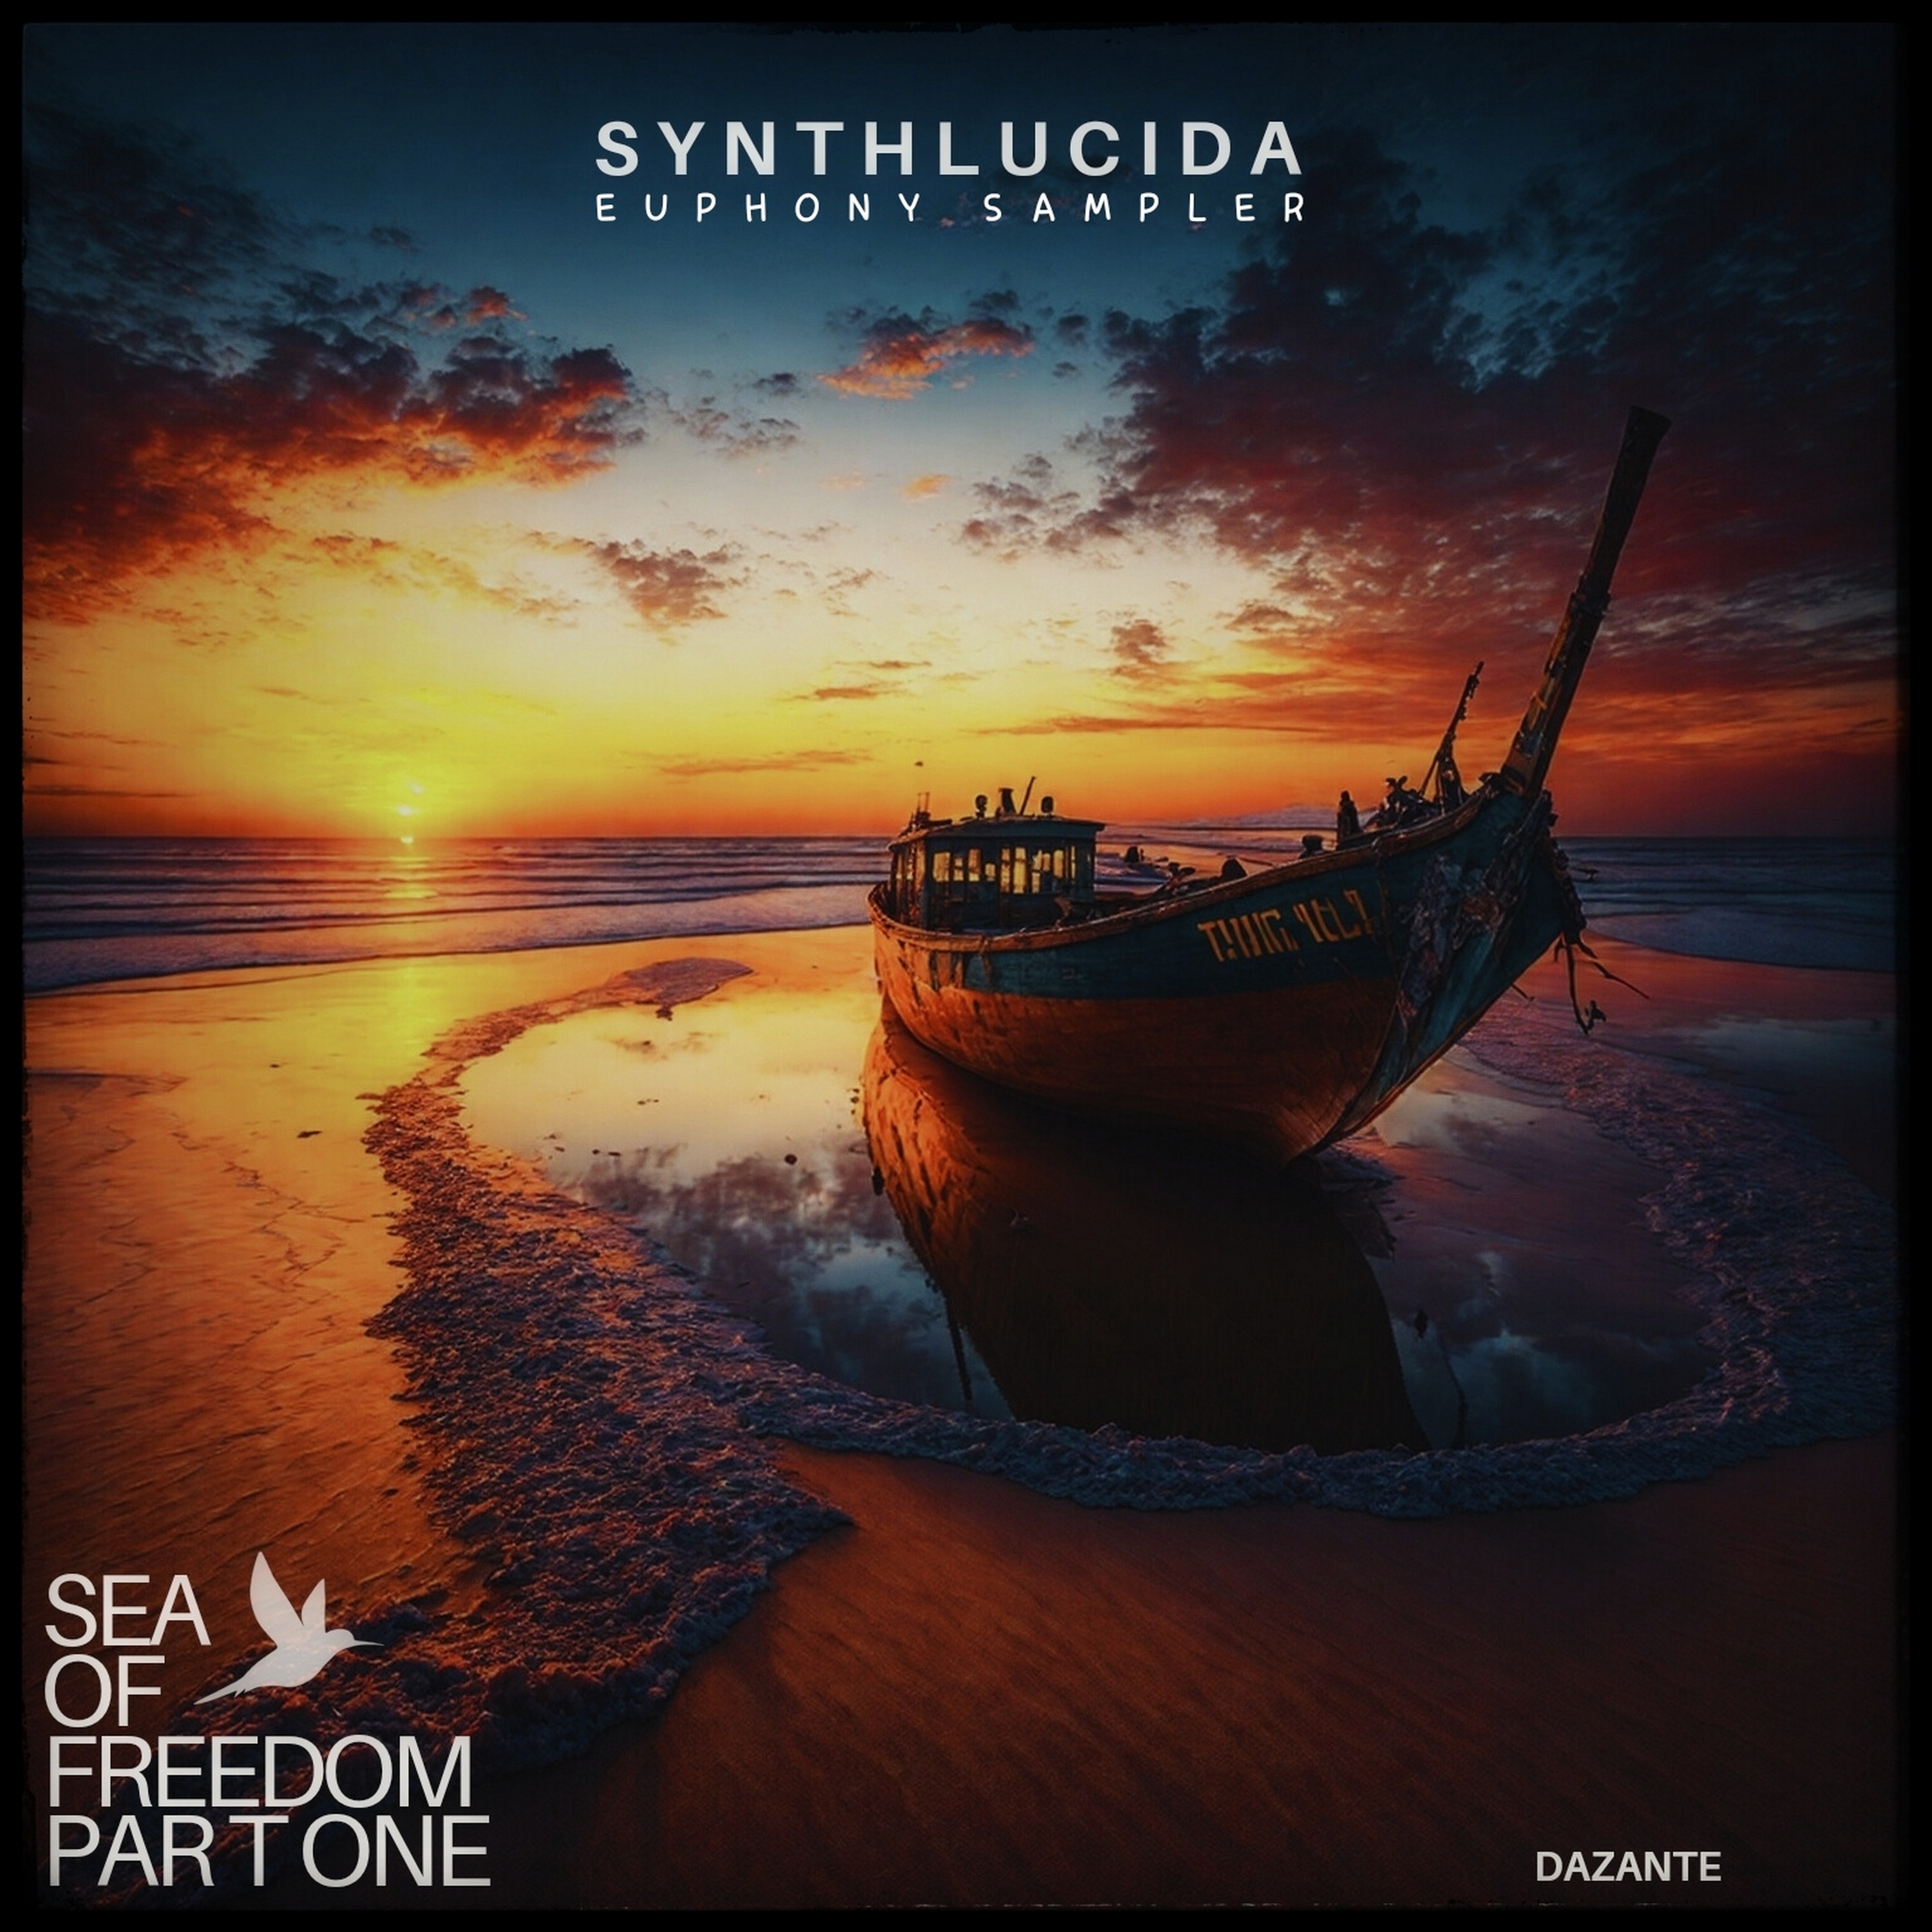 Sea Of Freedom, Euphony Sampler part One by Synthlucida music, Dazante.